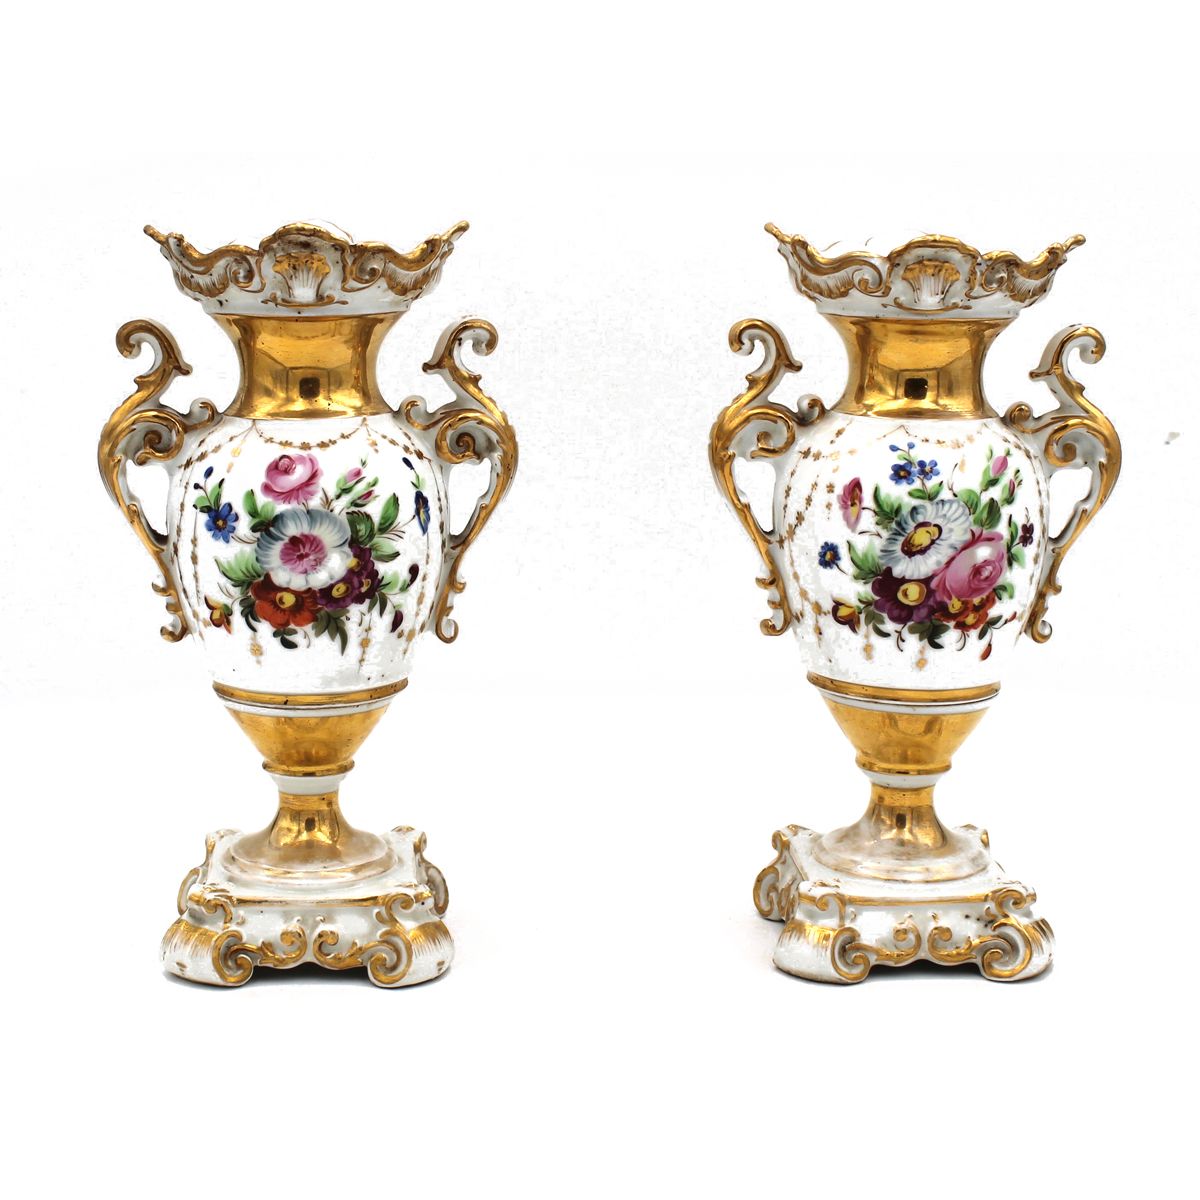 COPPIA DI VASI - PAIR OF VASES 古董瓷器，装饰有多色和鎏金的花卉图案。法国。路易-菲利普时代。Cm H 26
古老的瓷器上装饰着多&hellip;